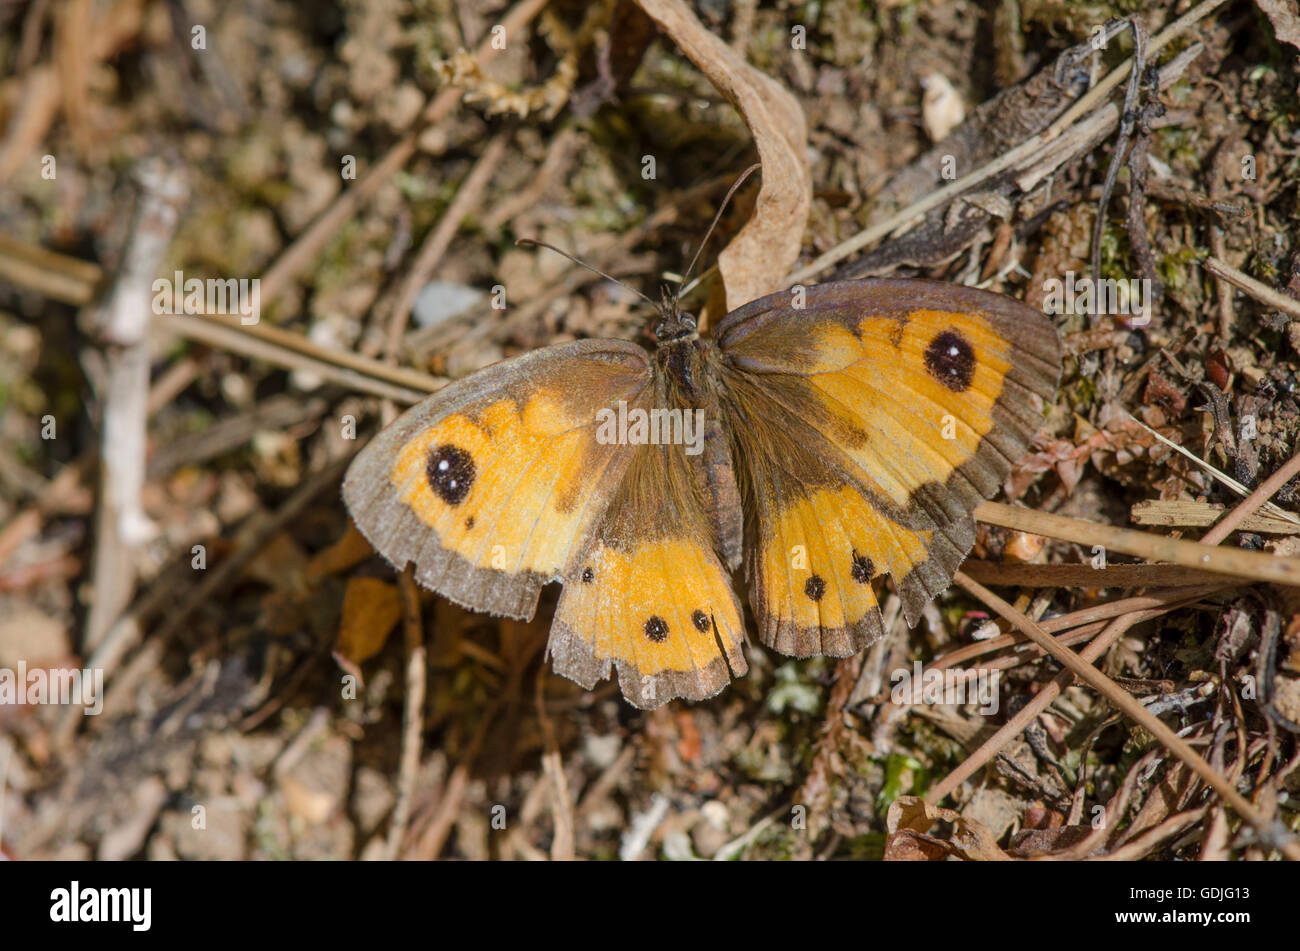 Spanish gatekeeper, Nymphalidae Pyronia bathseba, butterfly, Andalusia, Spain. Stock Photo